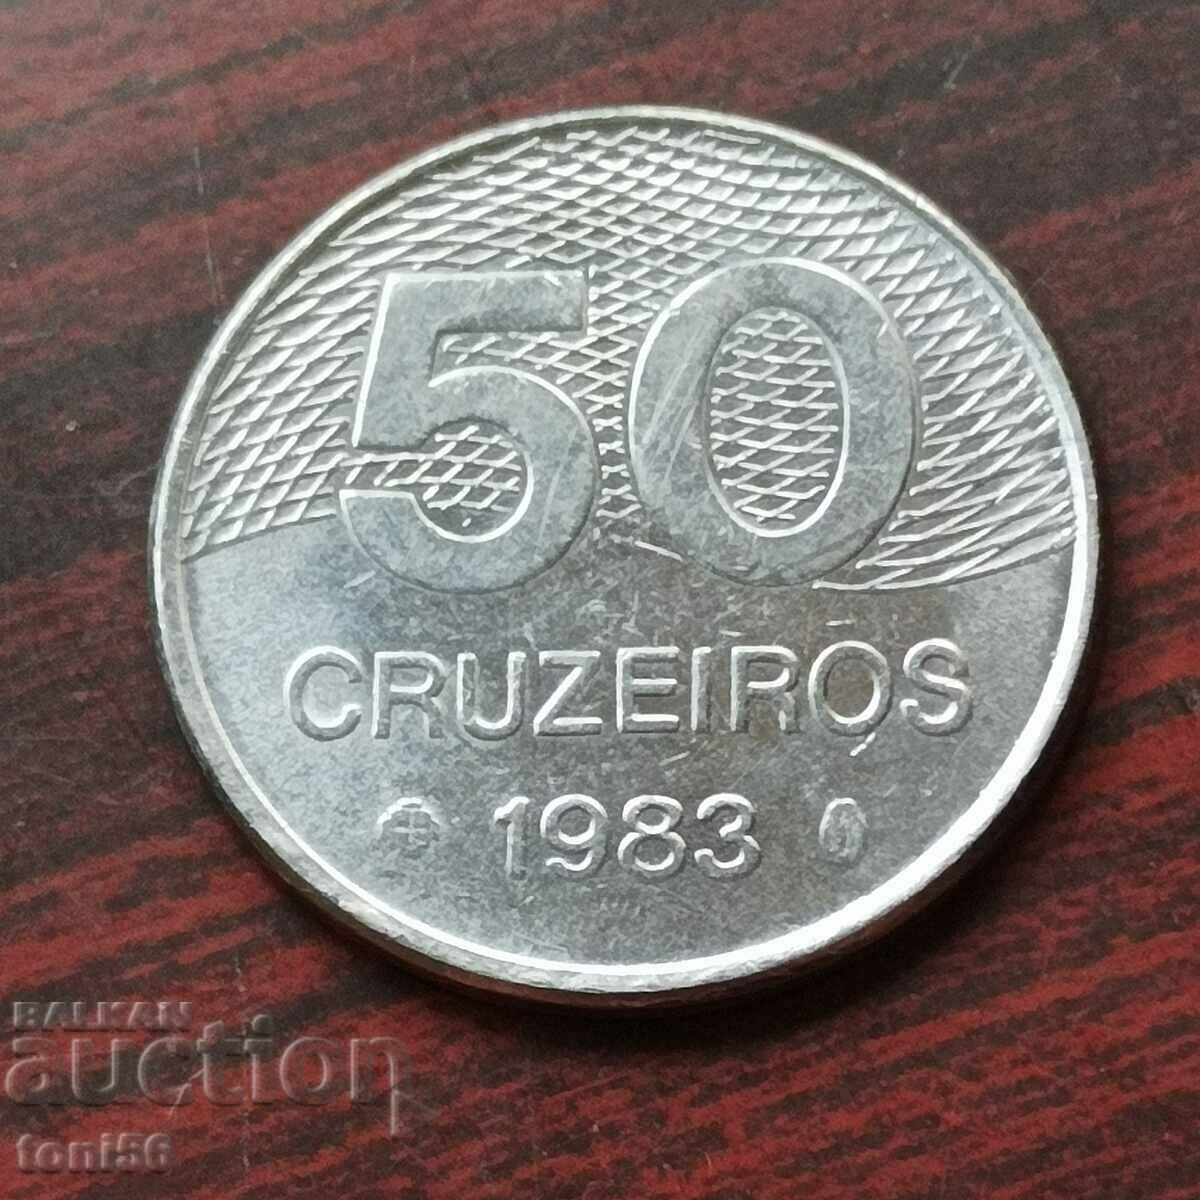 Brazilia 50 cruzeiros 1983 aUNC